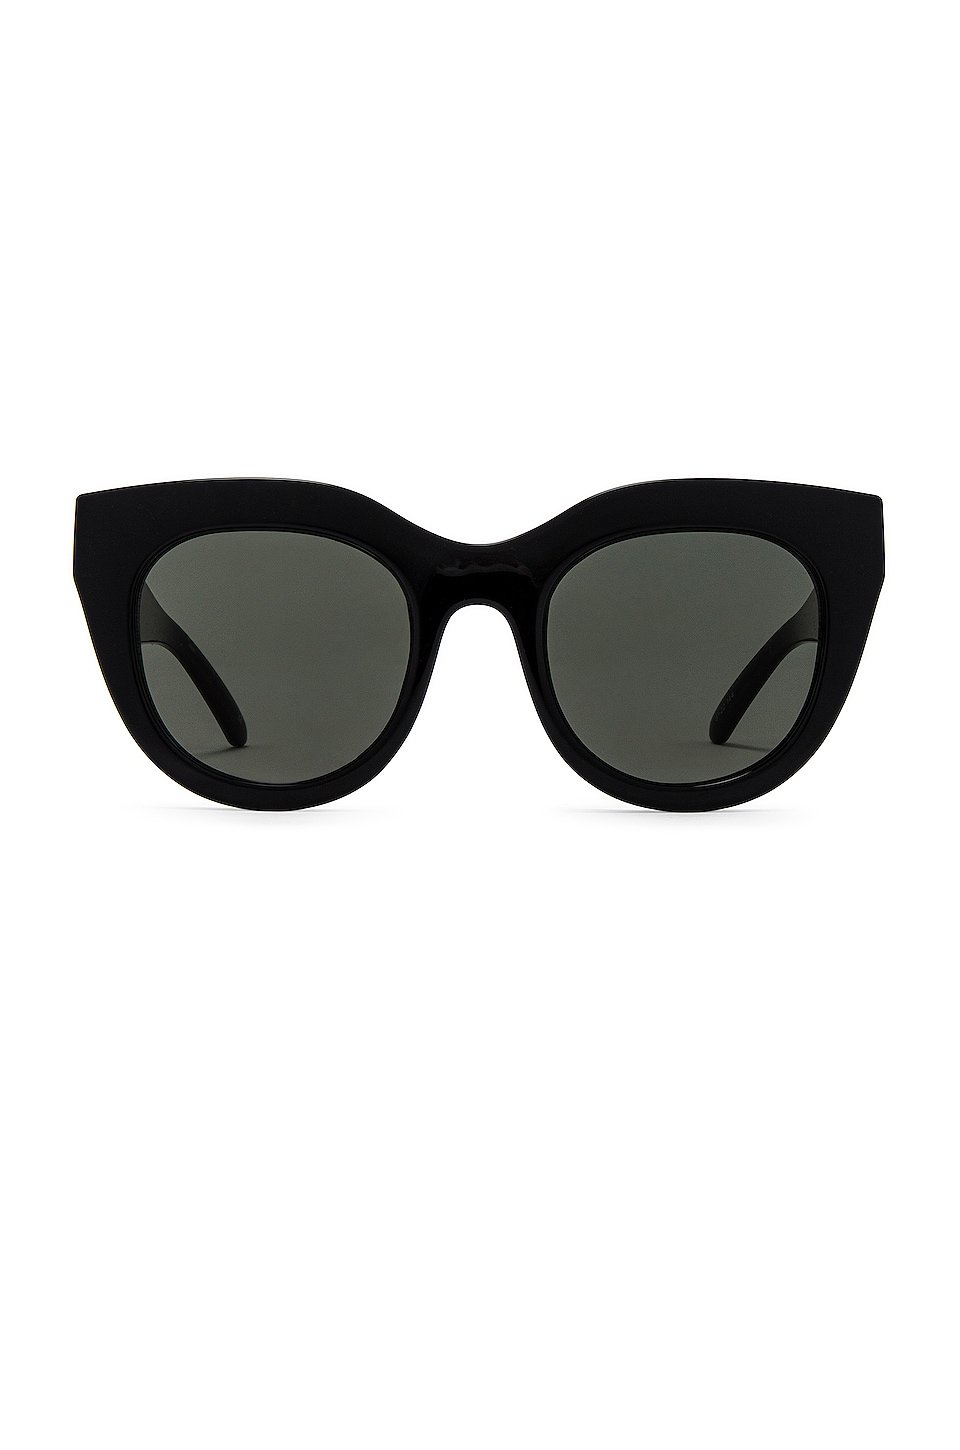 Le Specs Air Heart Sunglasses in Black